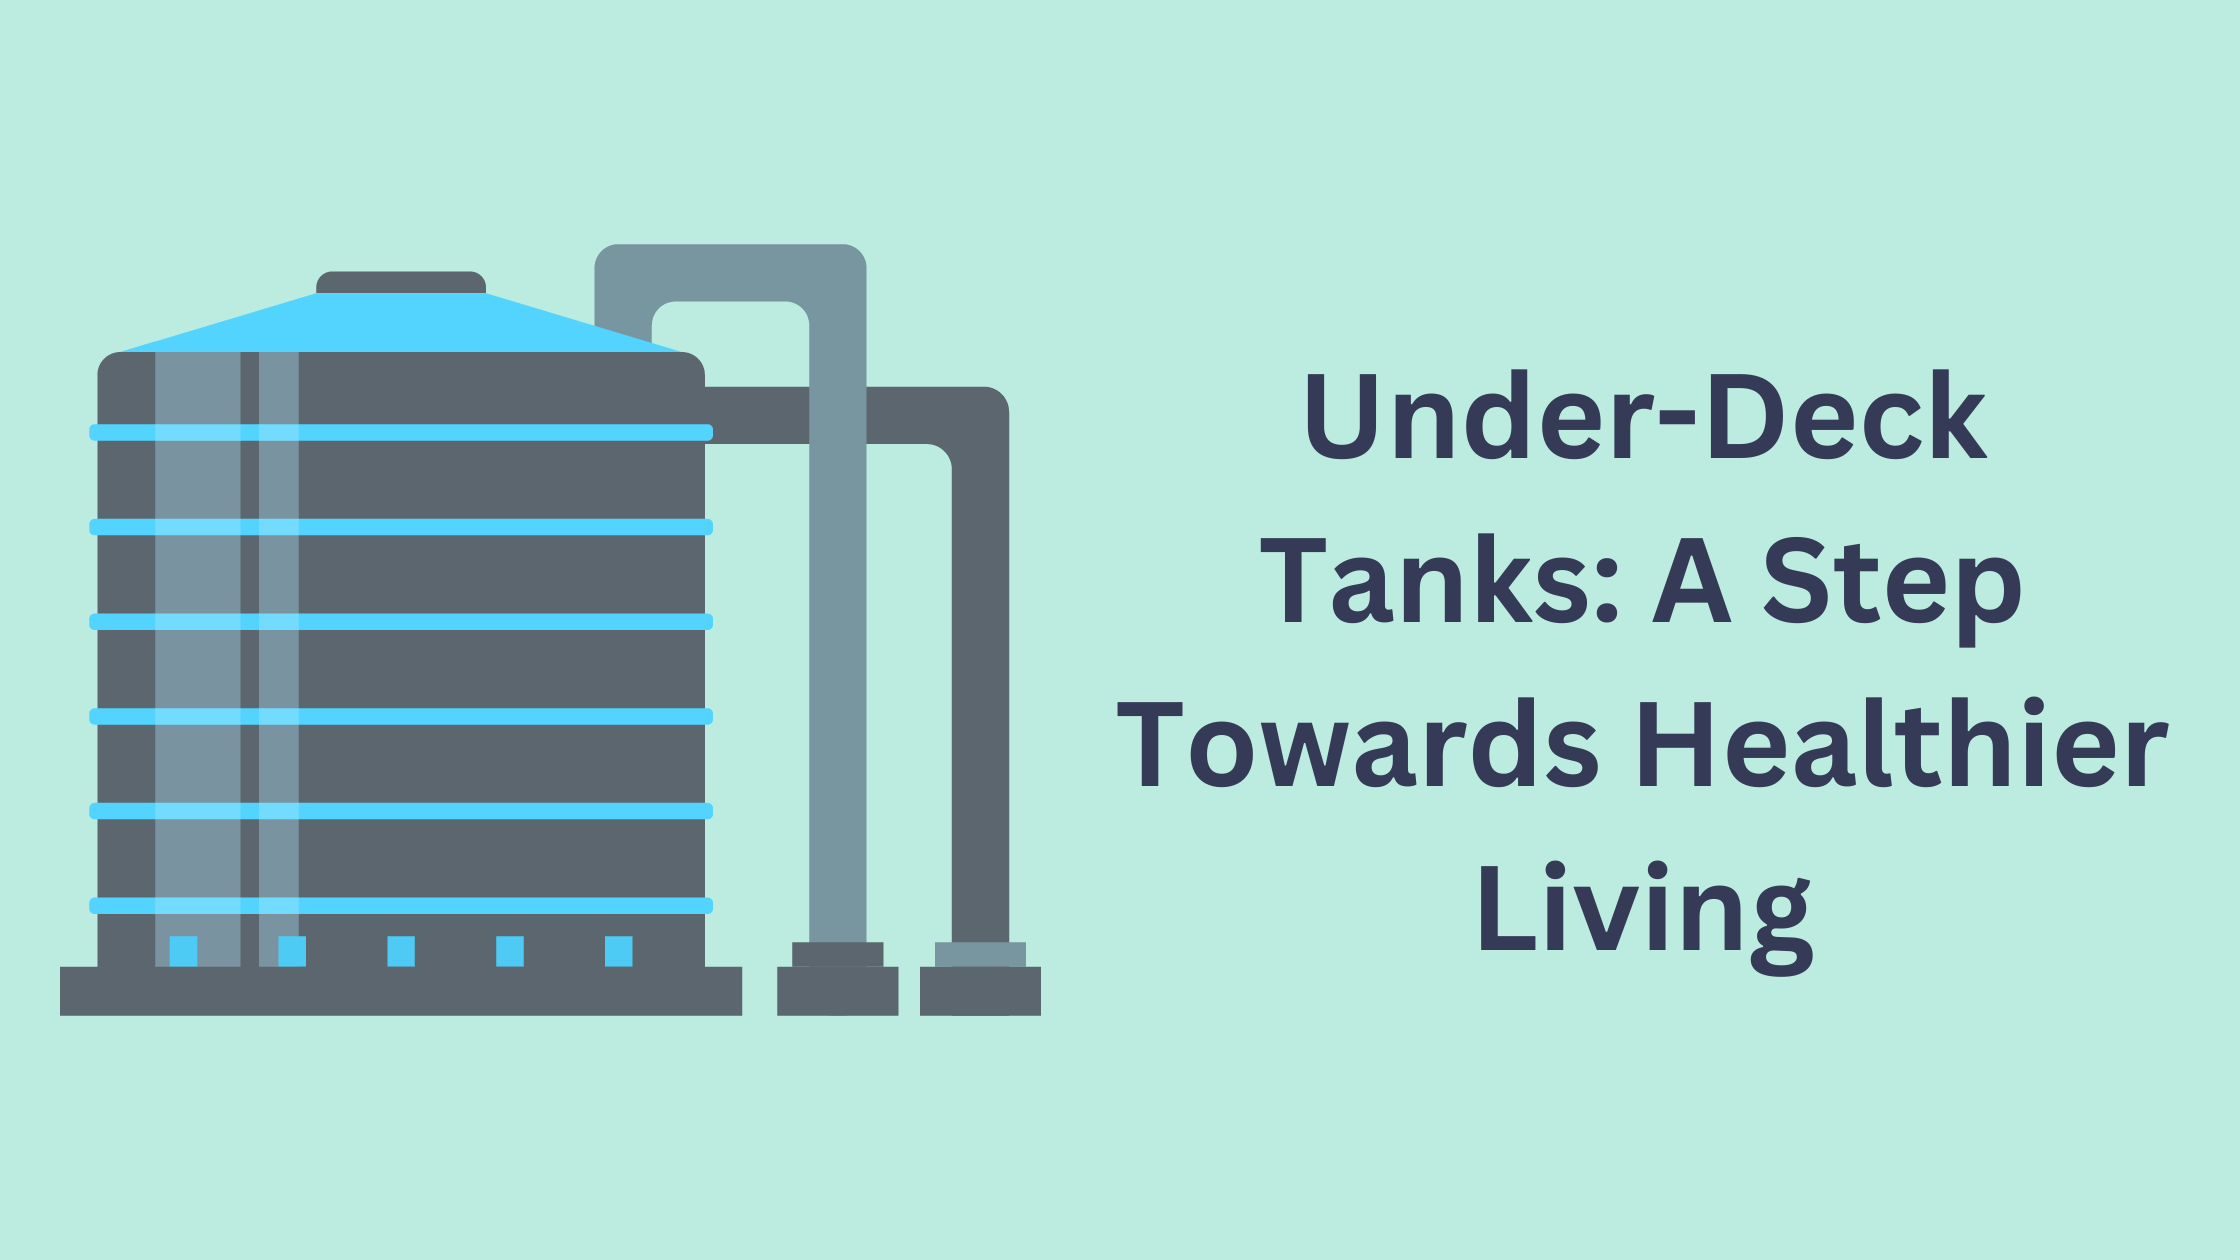 Under-Deck Tanks: A Step Towards Healthier Living